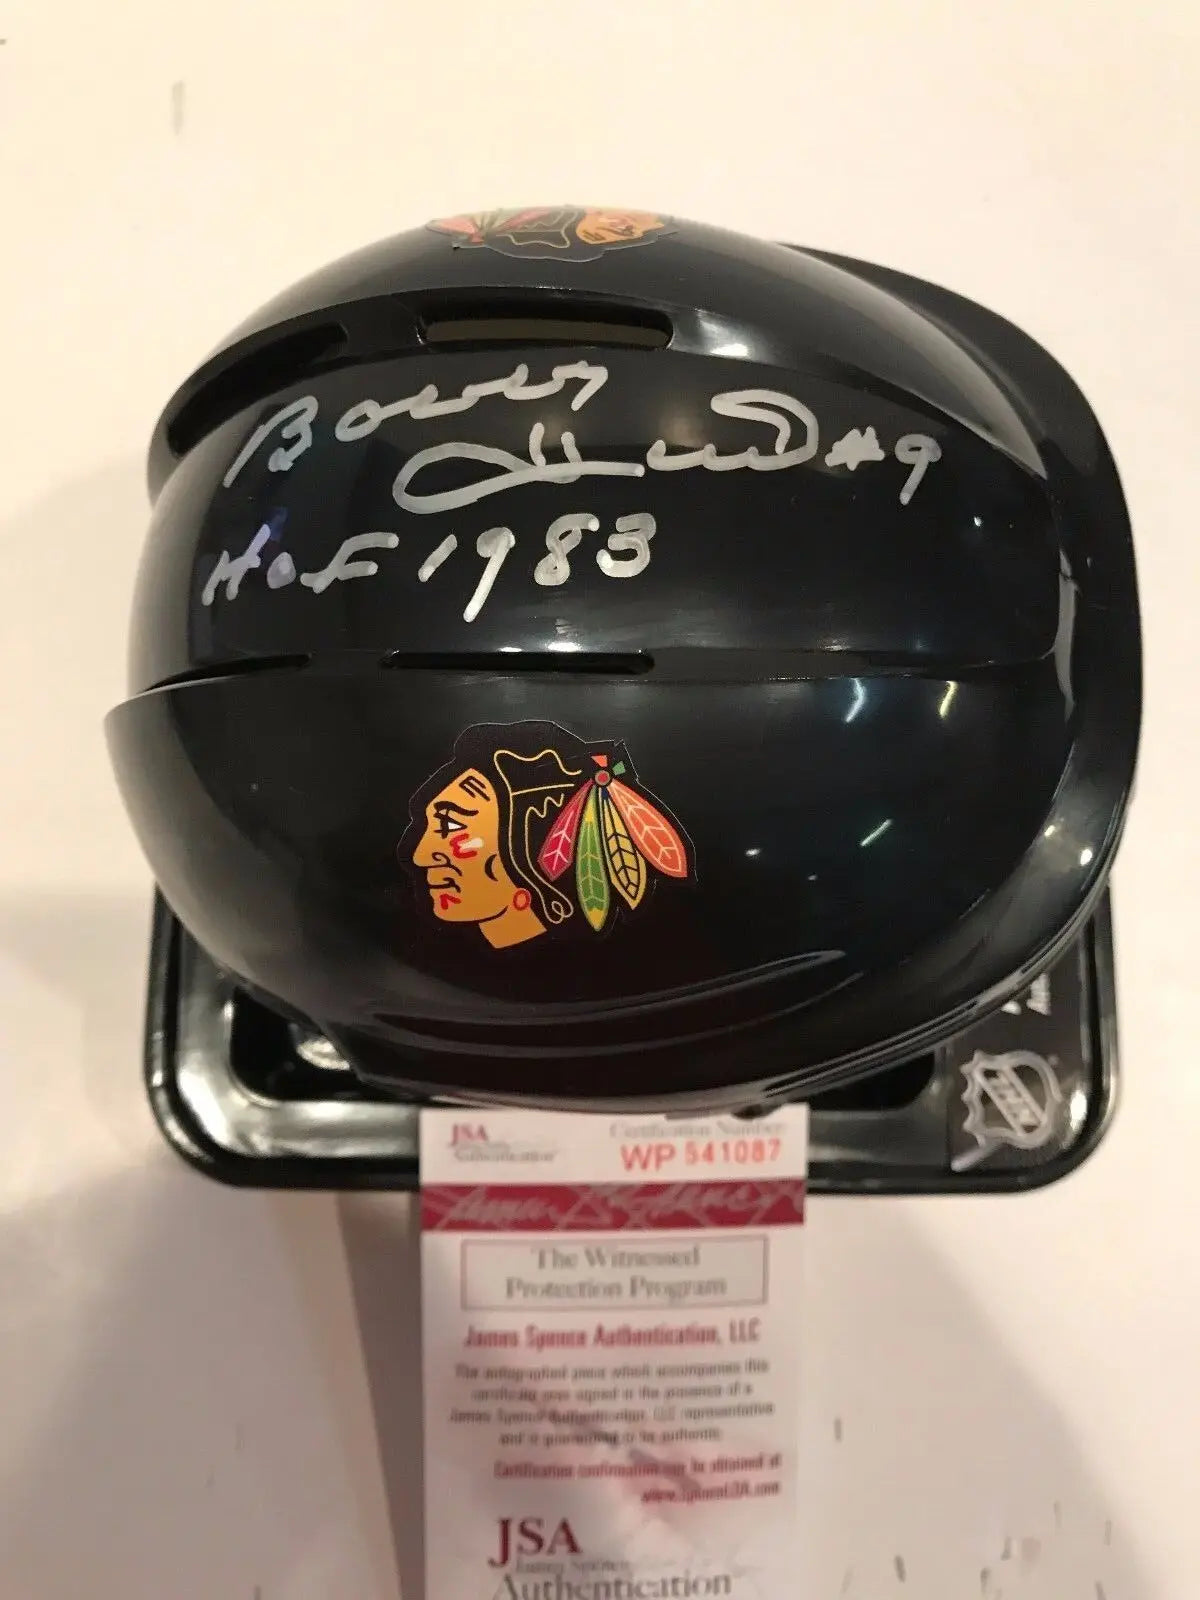 Bobby Hull Autographed Framed Blackhawks Jersey